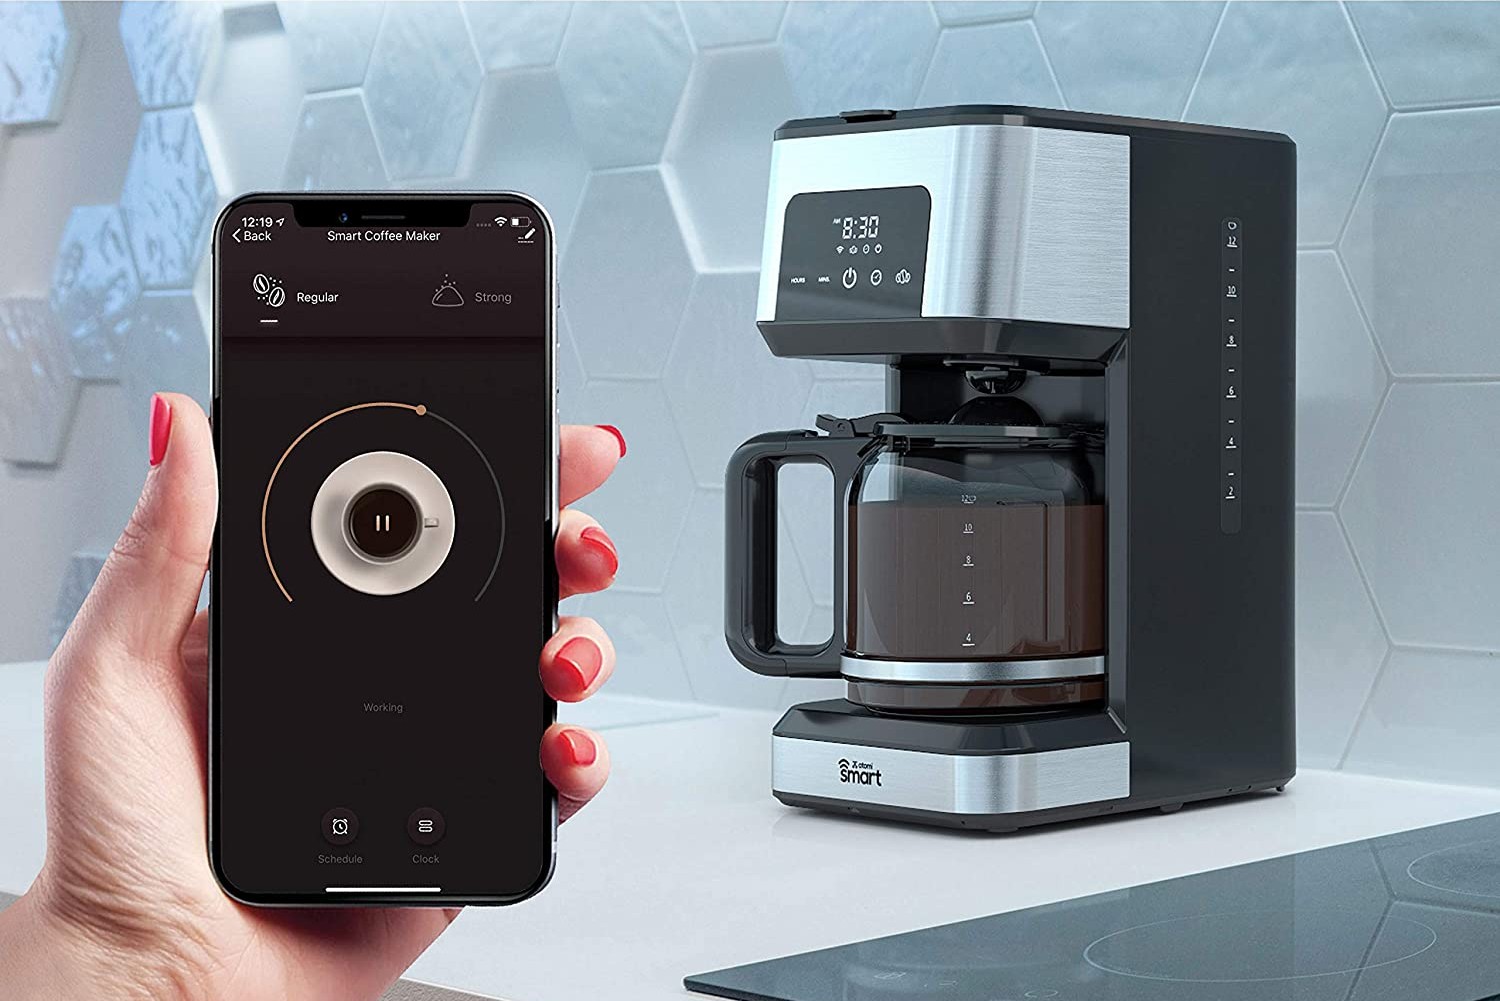 https://www.digitaltrends.com/wp-content/uploads/2021/12/atomi-smart-coffee-maker.jpg?fit=500%2C335&p=1